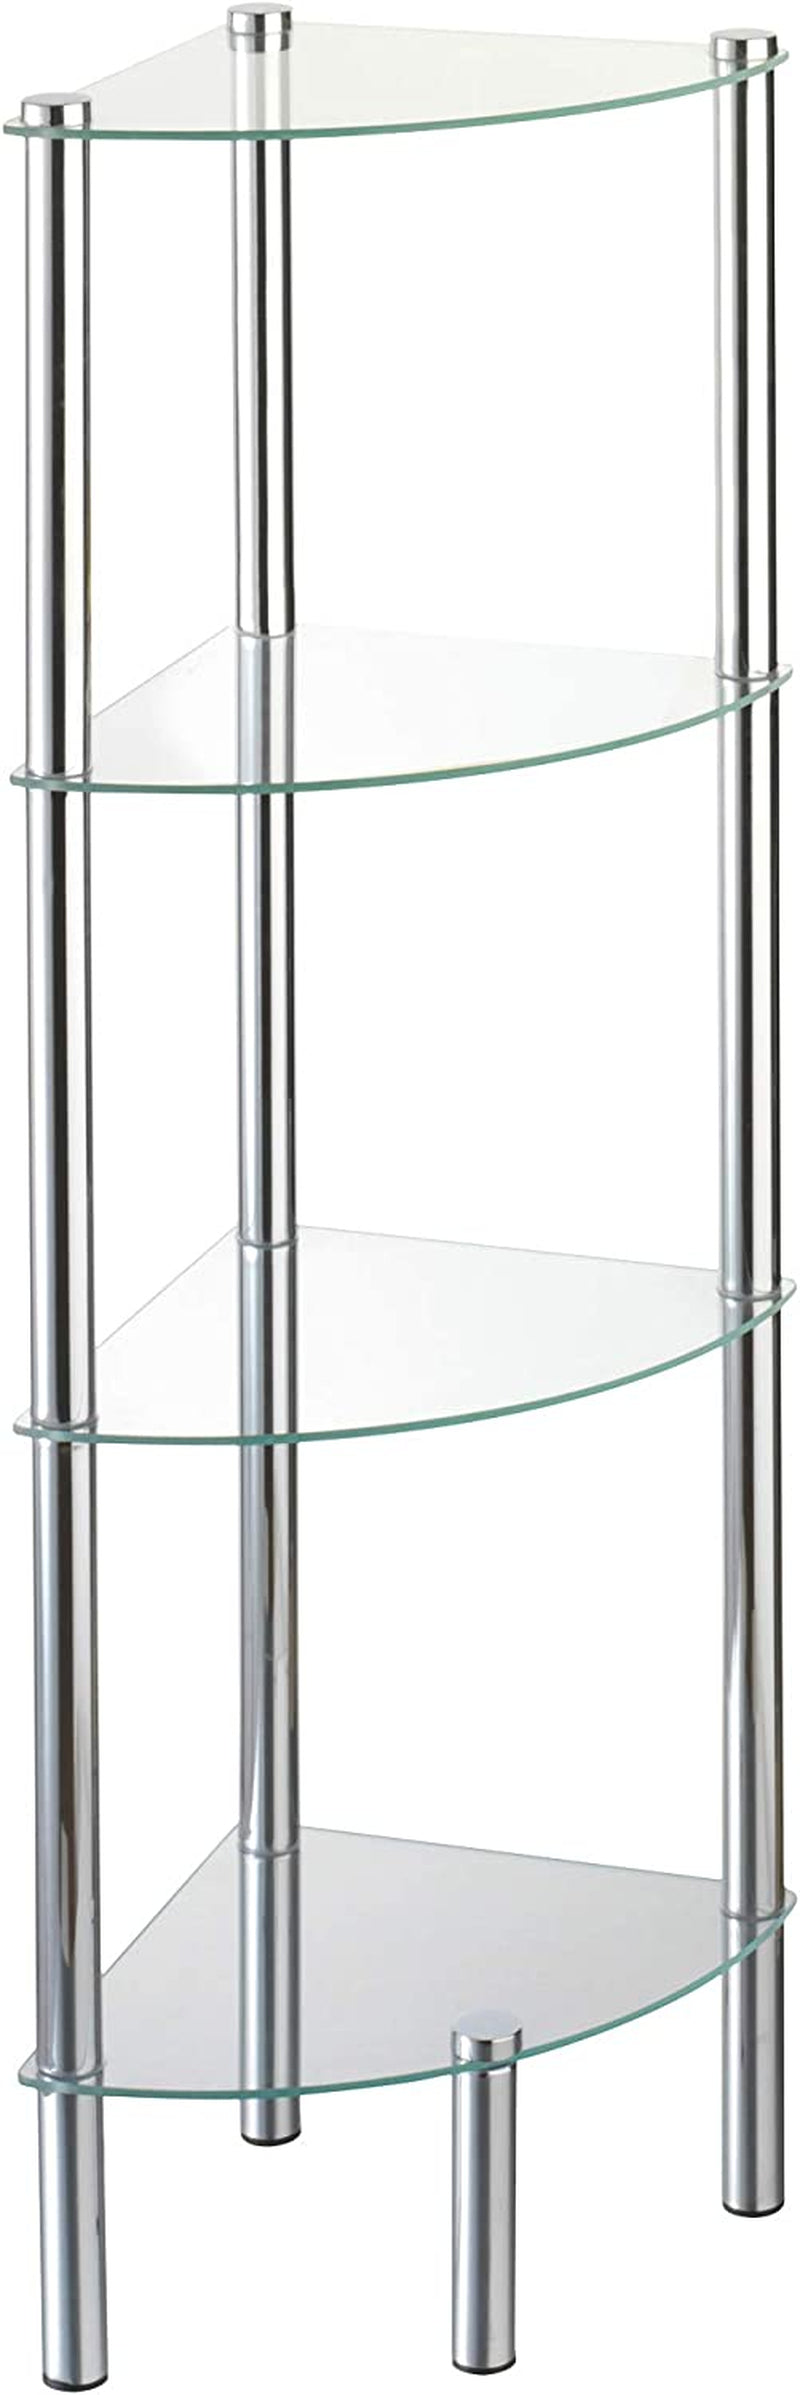 Solanio 282134 Standing Corner Shelf Rack Chrome-Plated 4 Glass Shelves 30X30X108 Cm